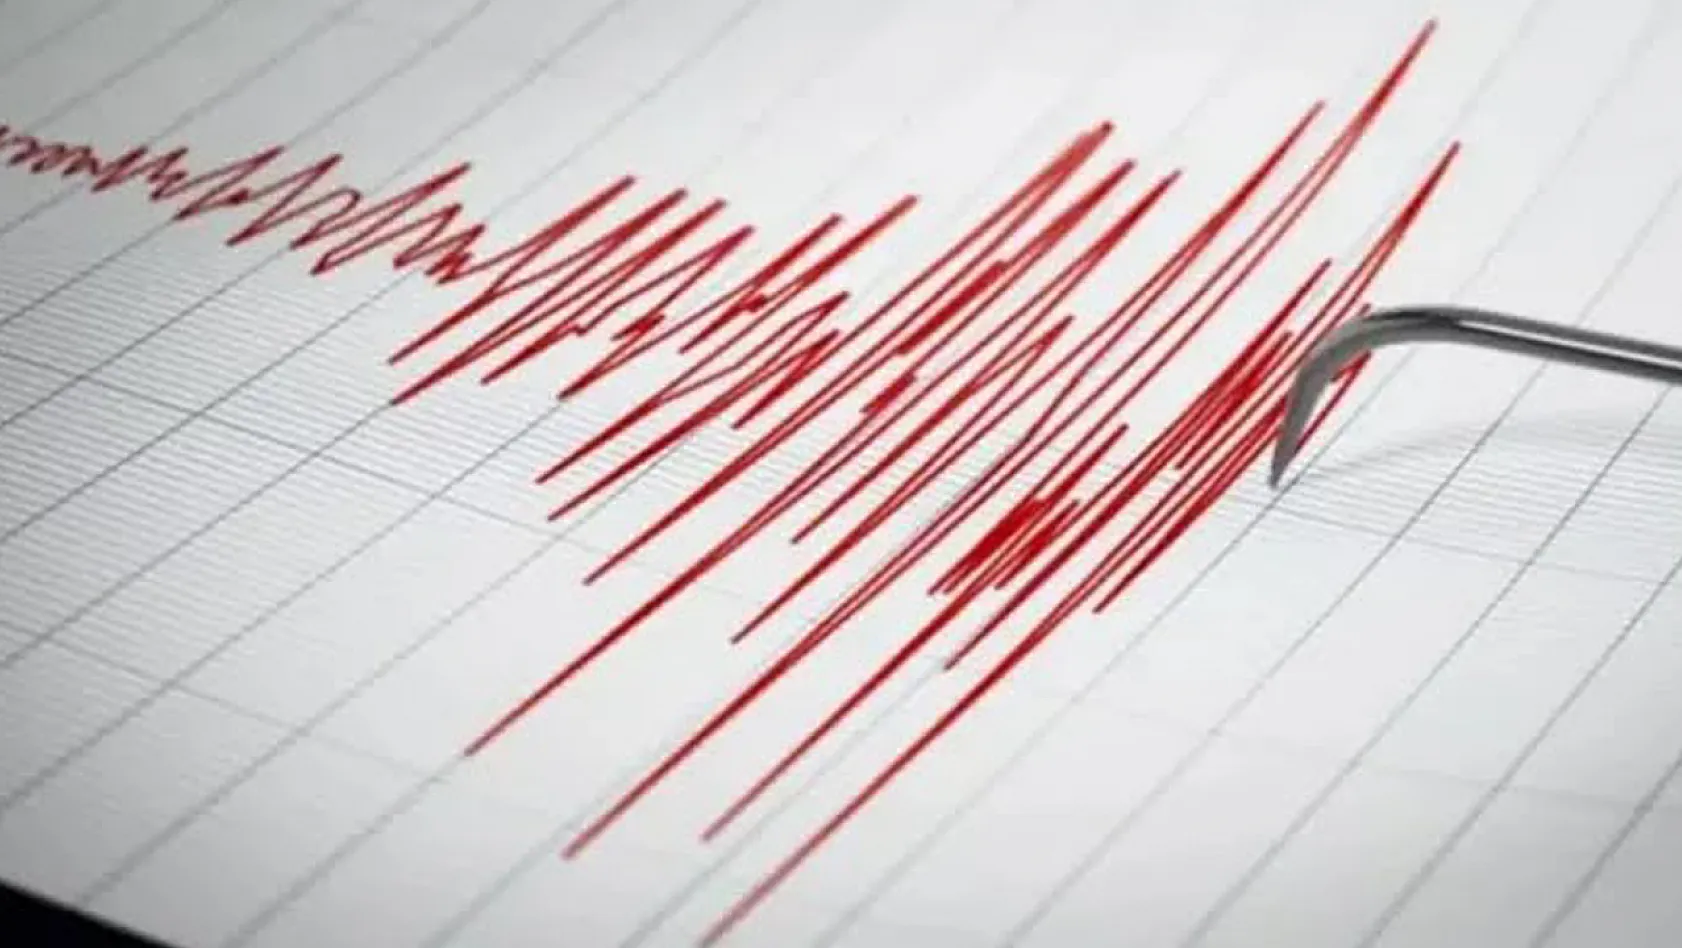 Kahramanmaraş'da Deprem